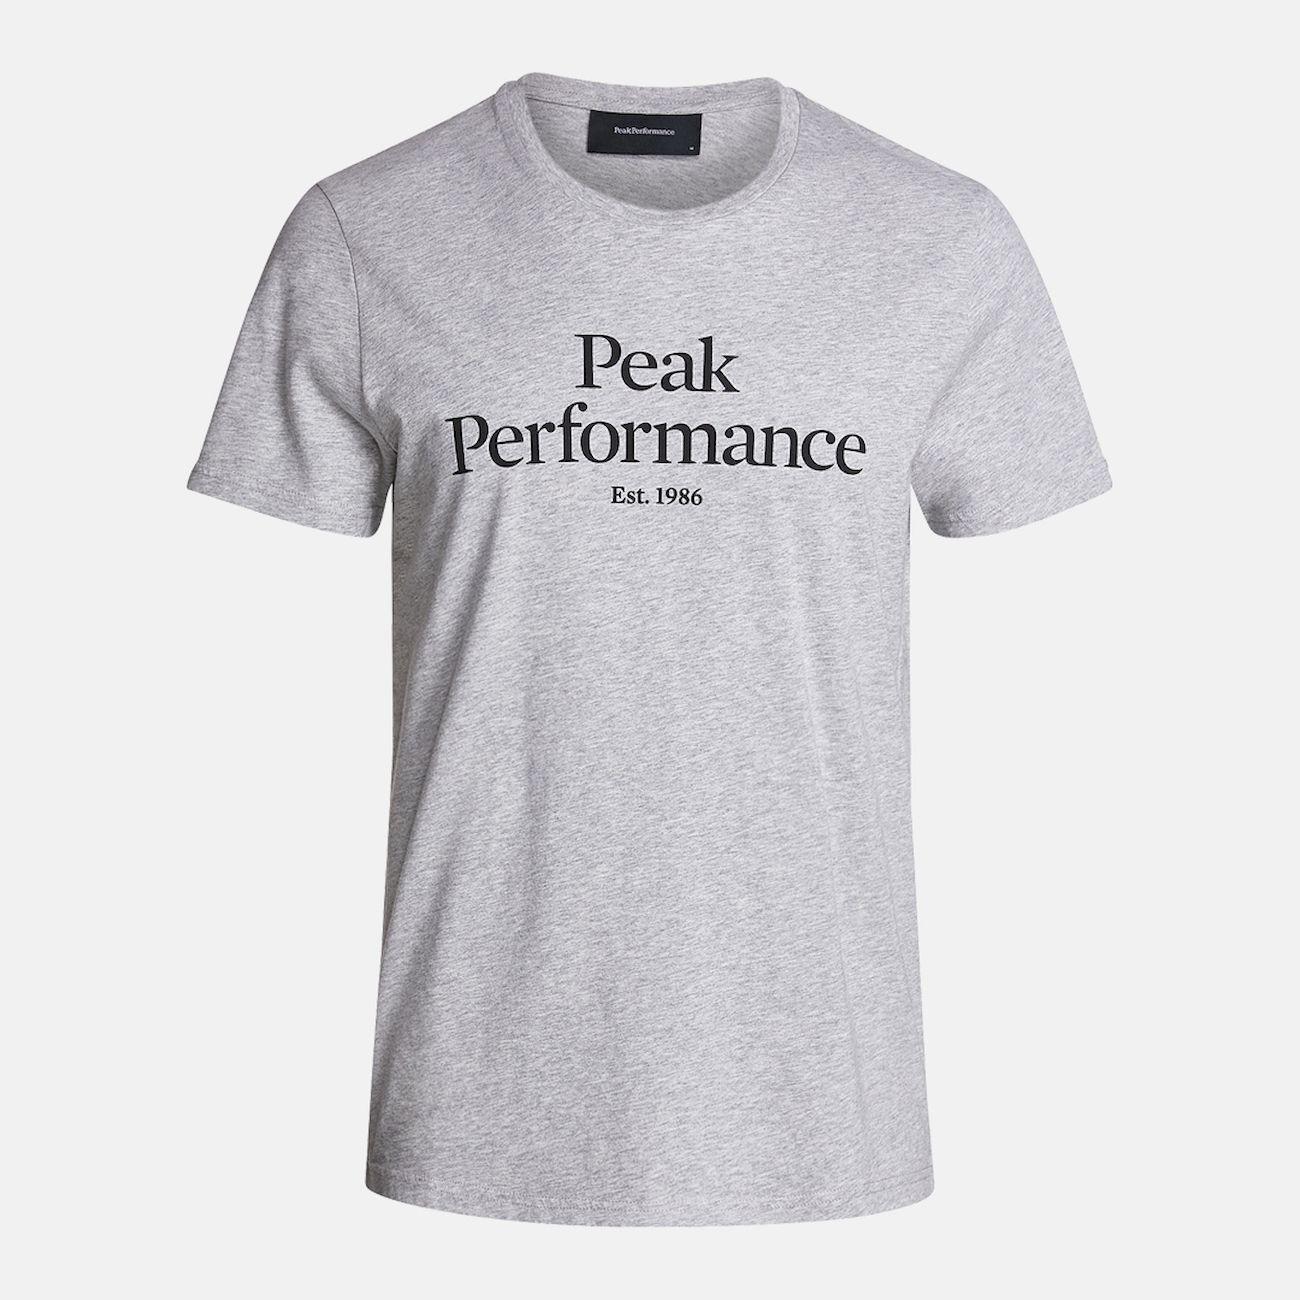 Peak Performance Original Tee - T-shirt - Herr